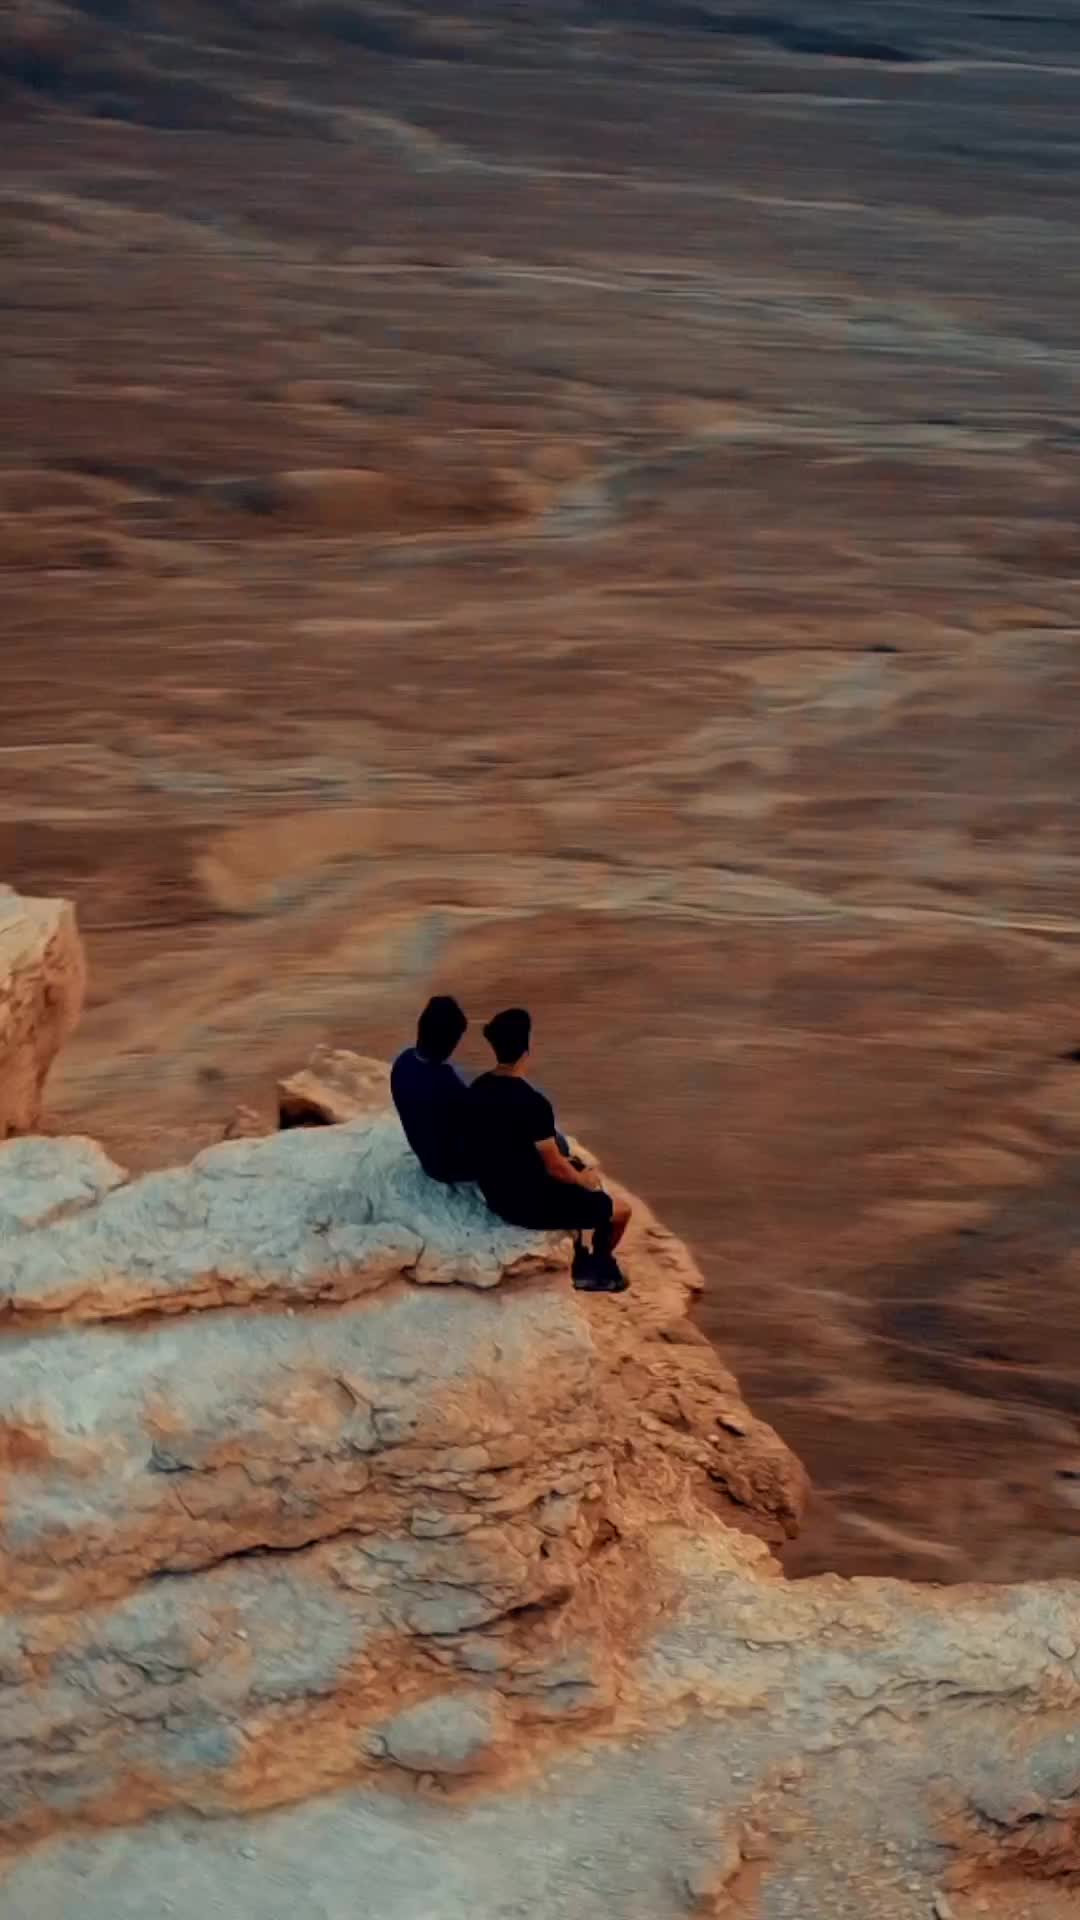 Exploring Saudi Arabia's Edge of the World Desert